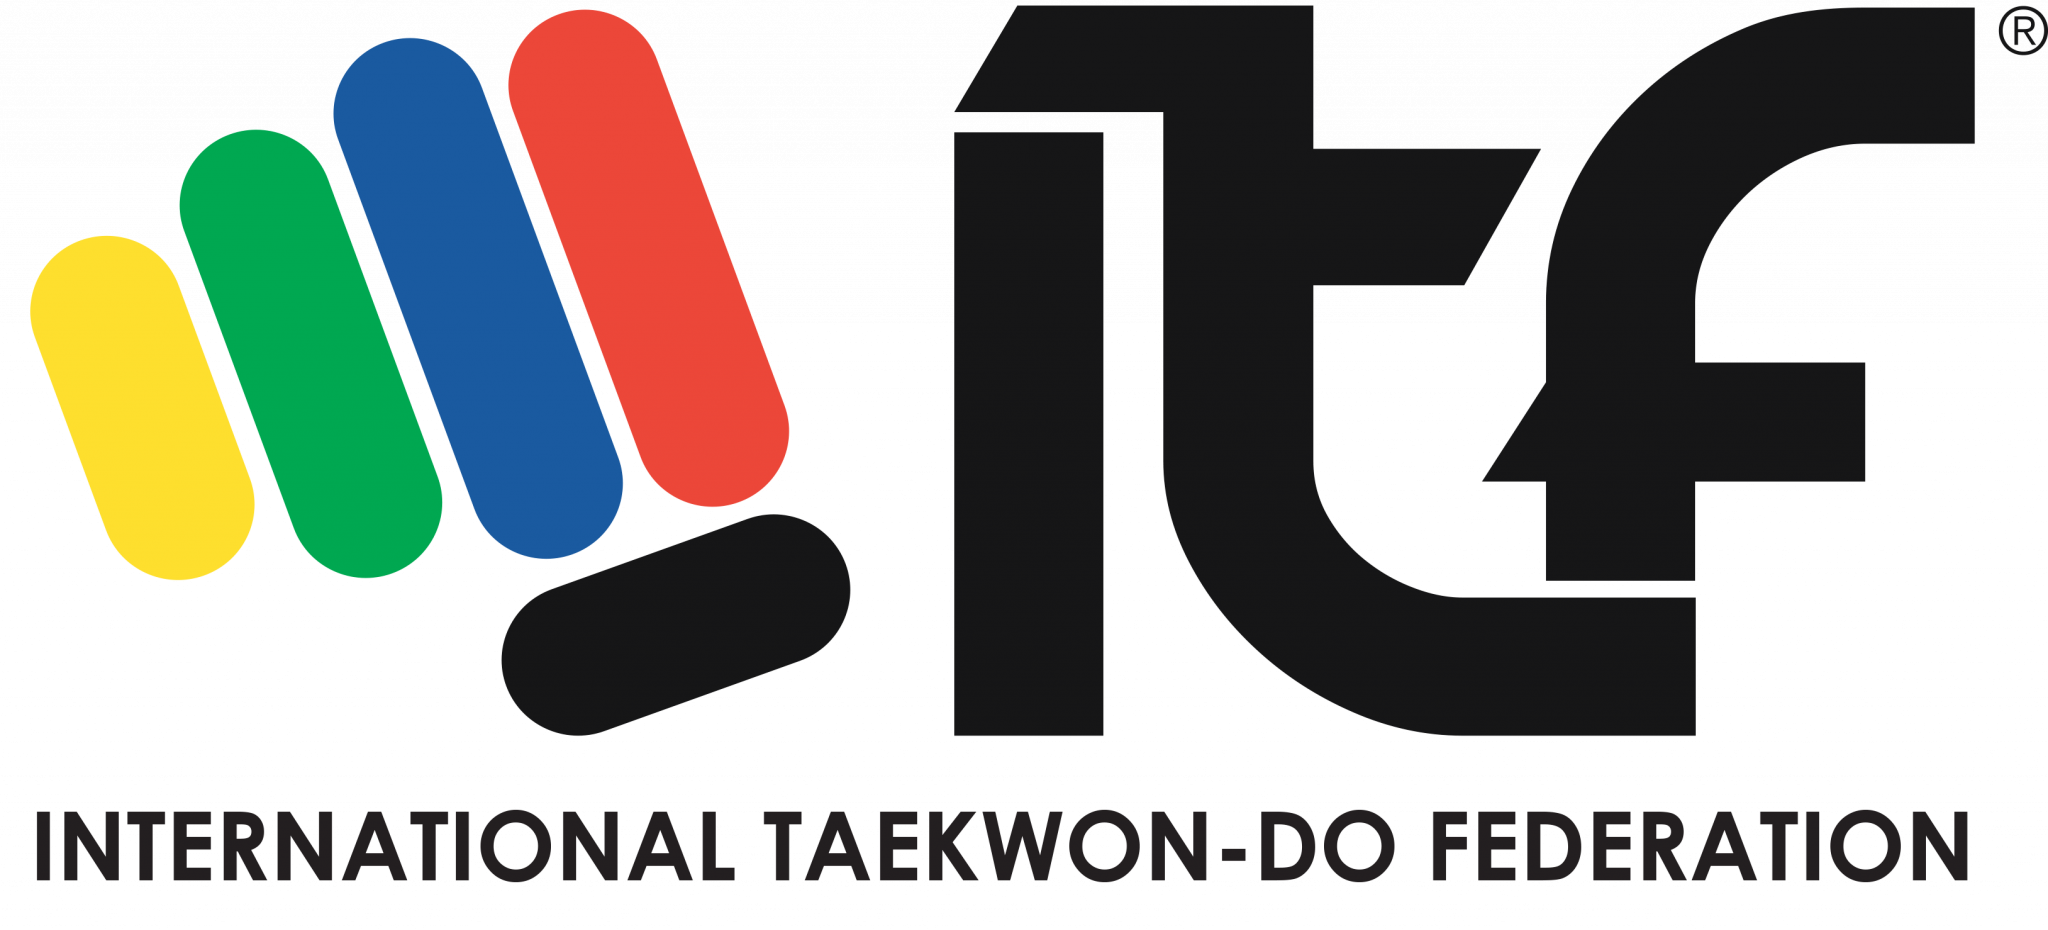  Austria-based Taekwo-Do Federation declared non-compliant by WADA